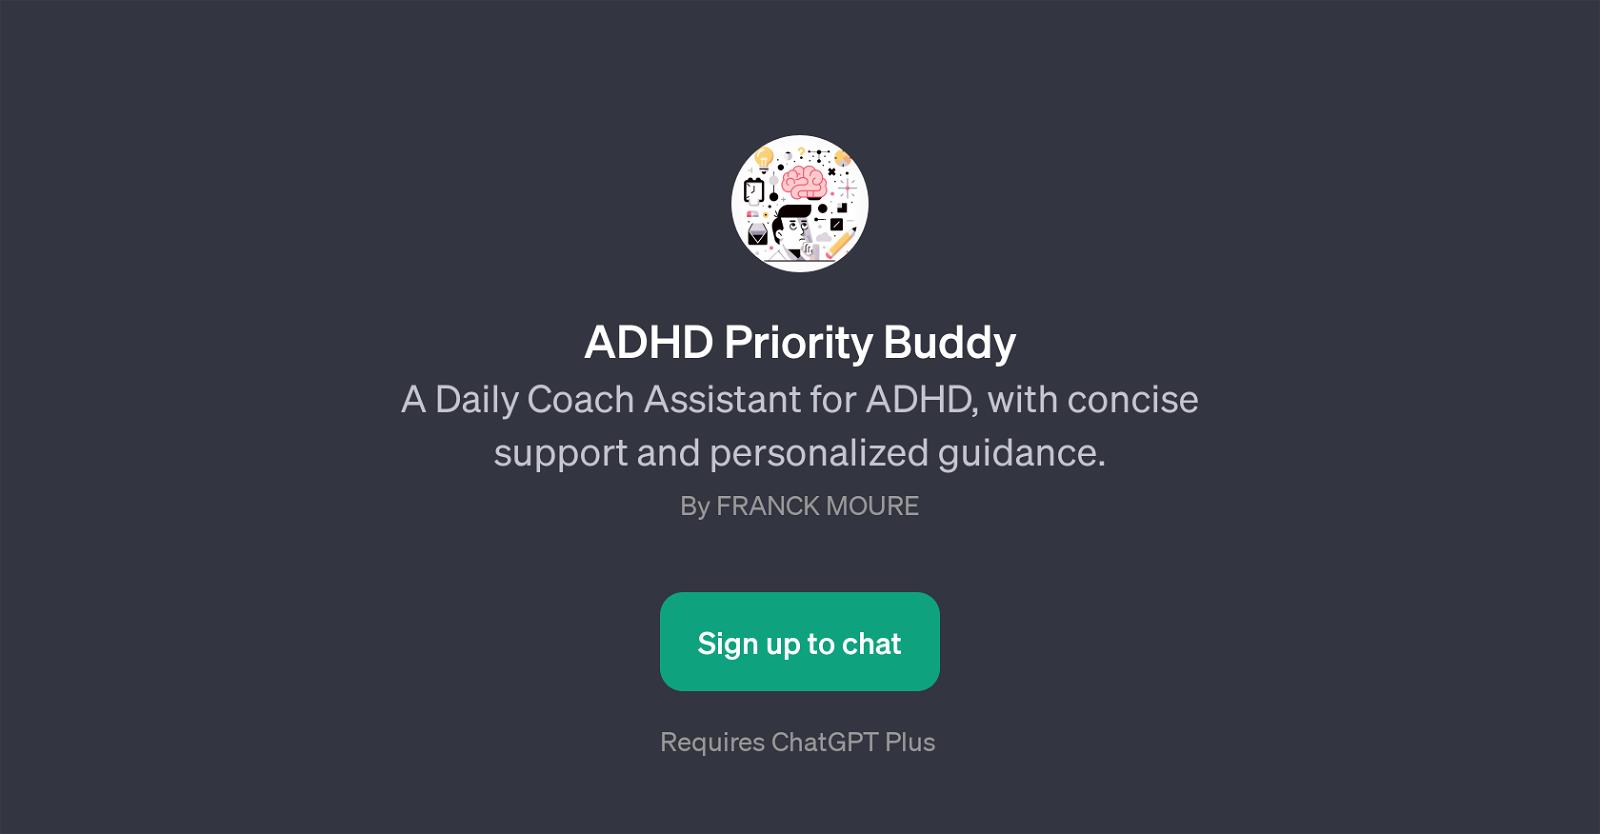 ADHD Priority Buddy website